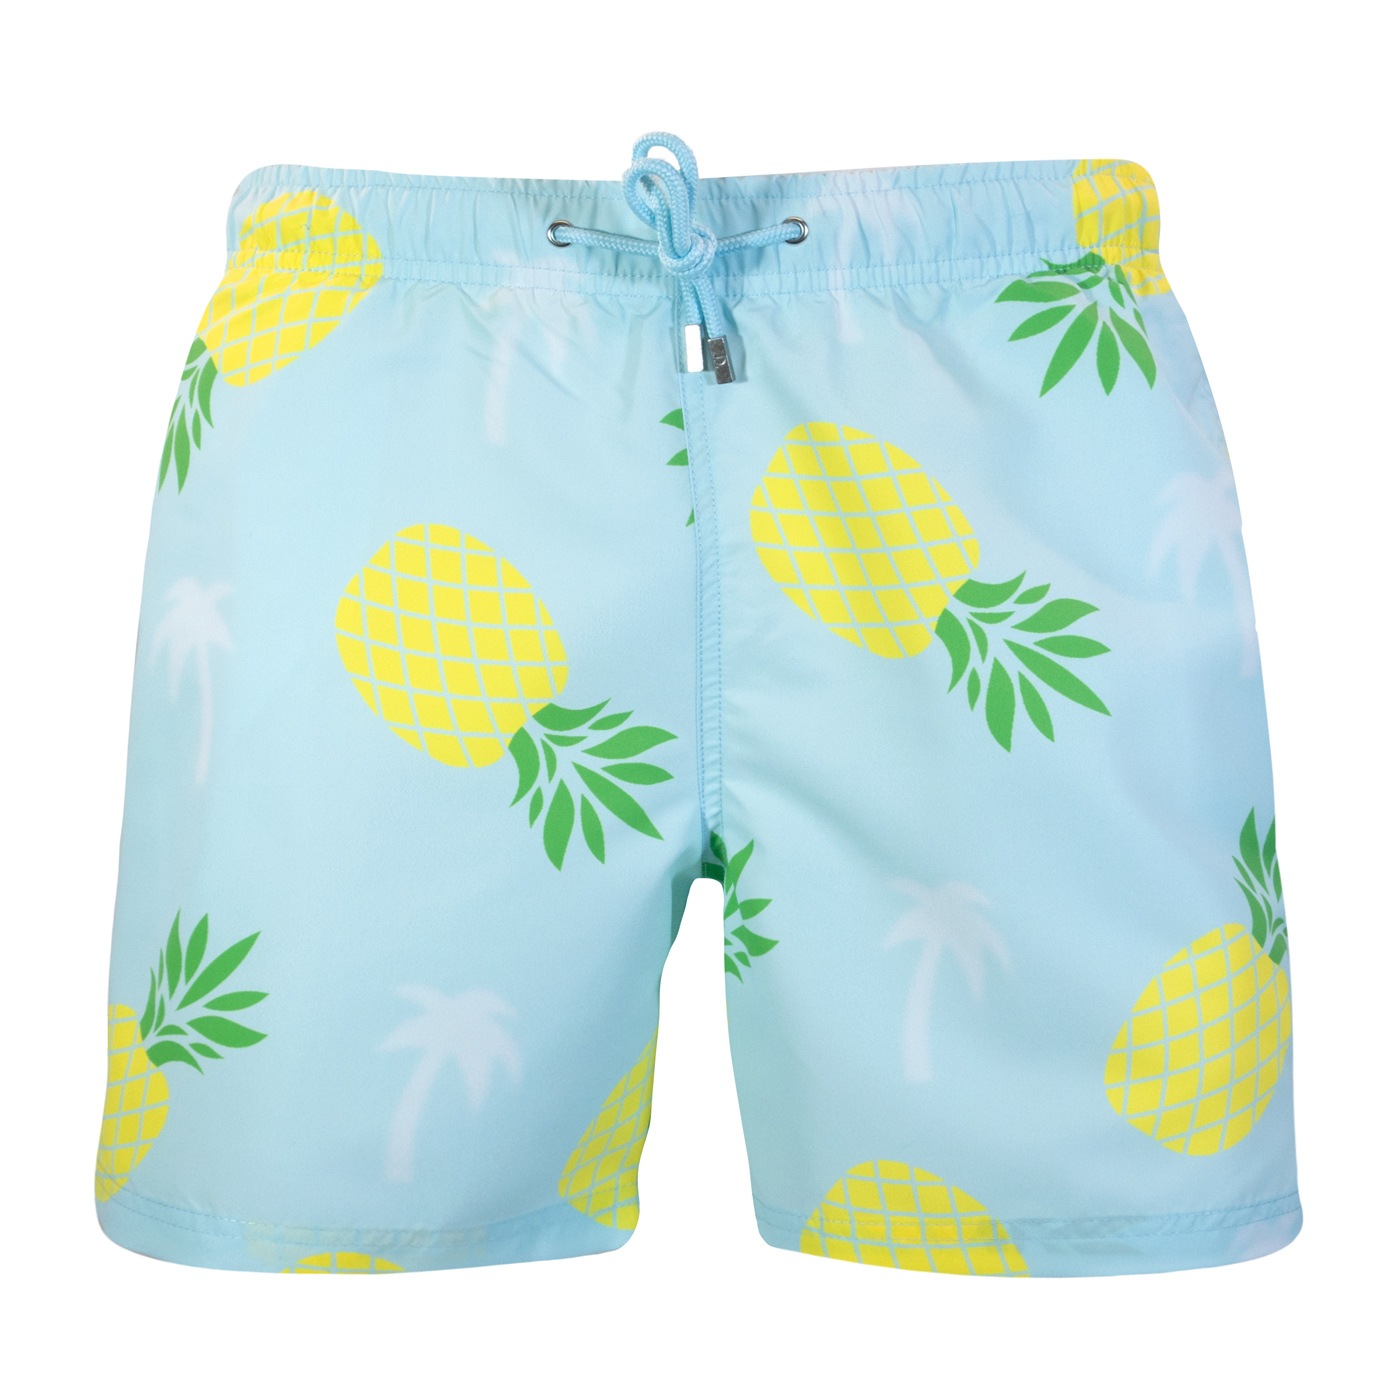 Buy Pineapple Matching Couples Swimwear online – Men's designer swimwear